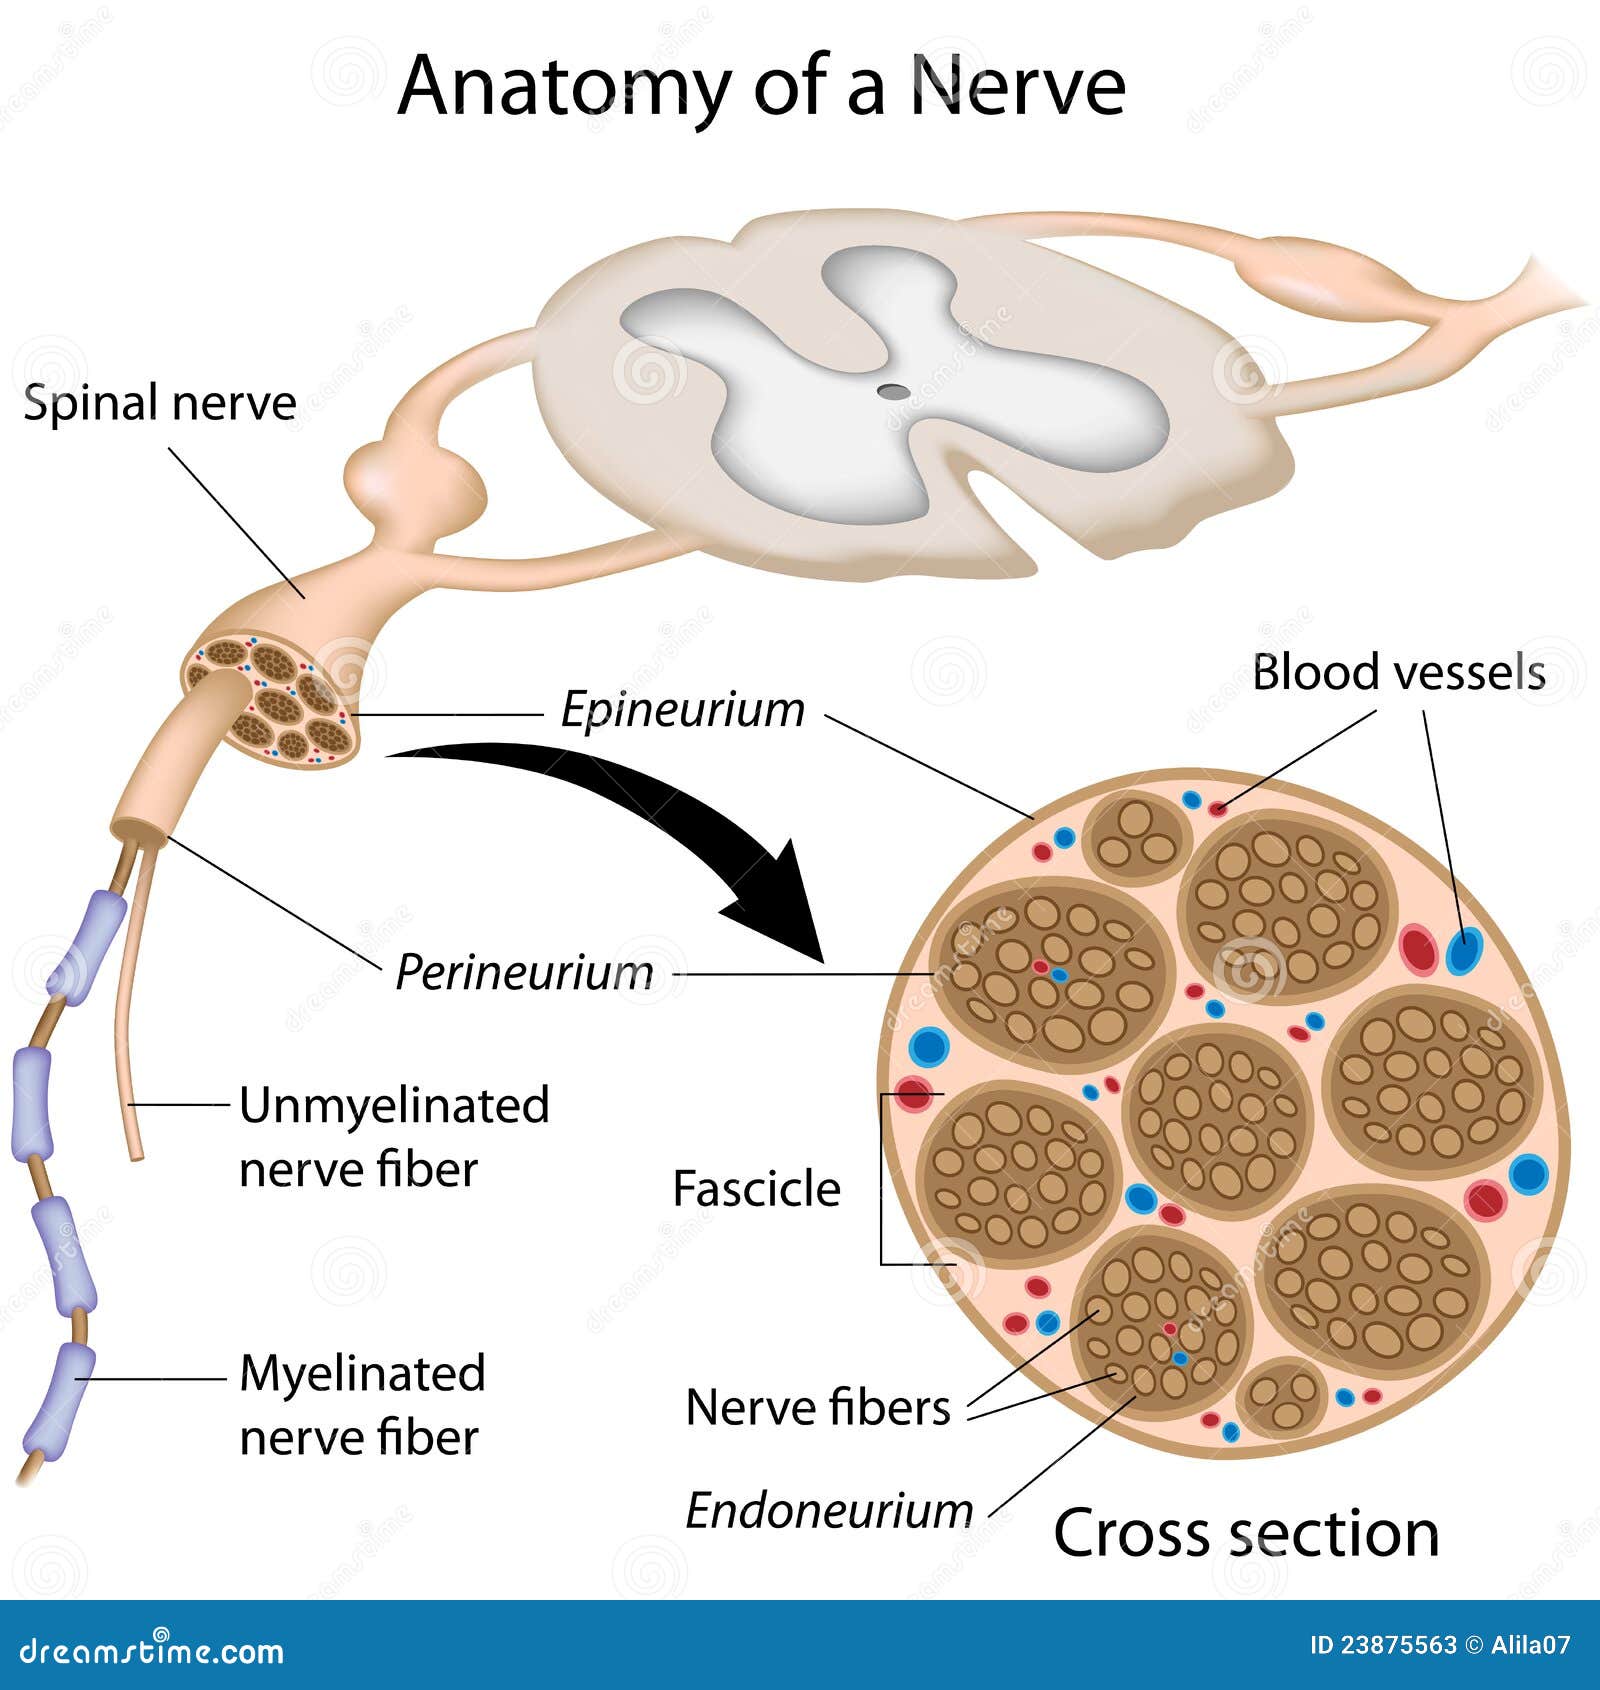 Anatomy Of A Nerve Stock Photos - Image: 23875563